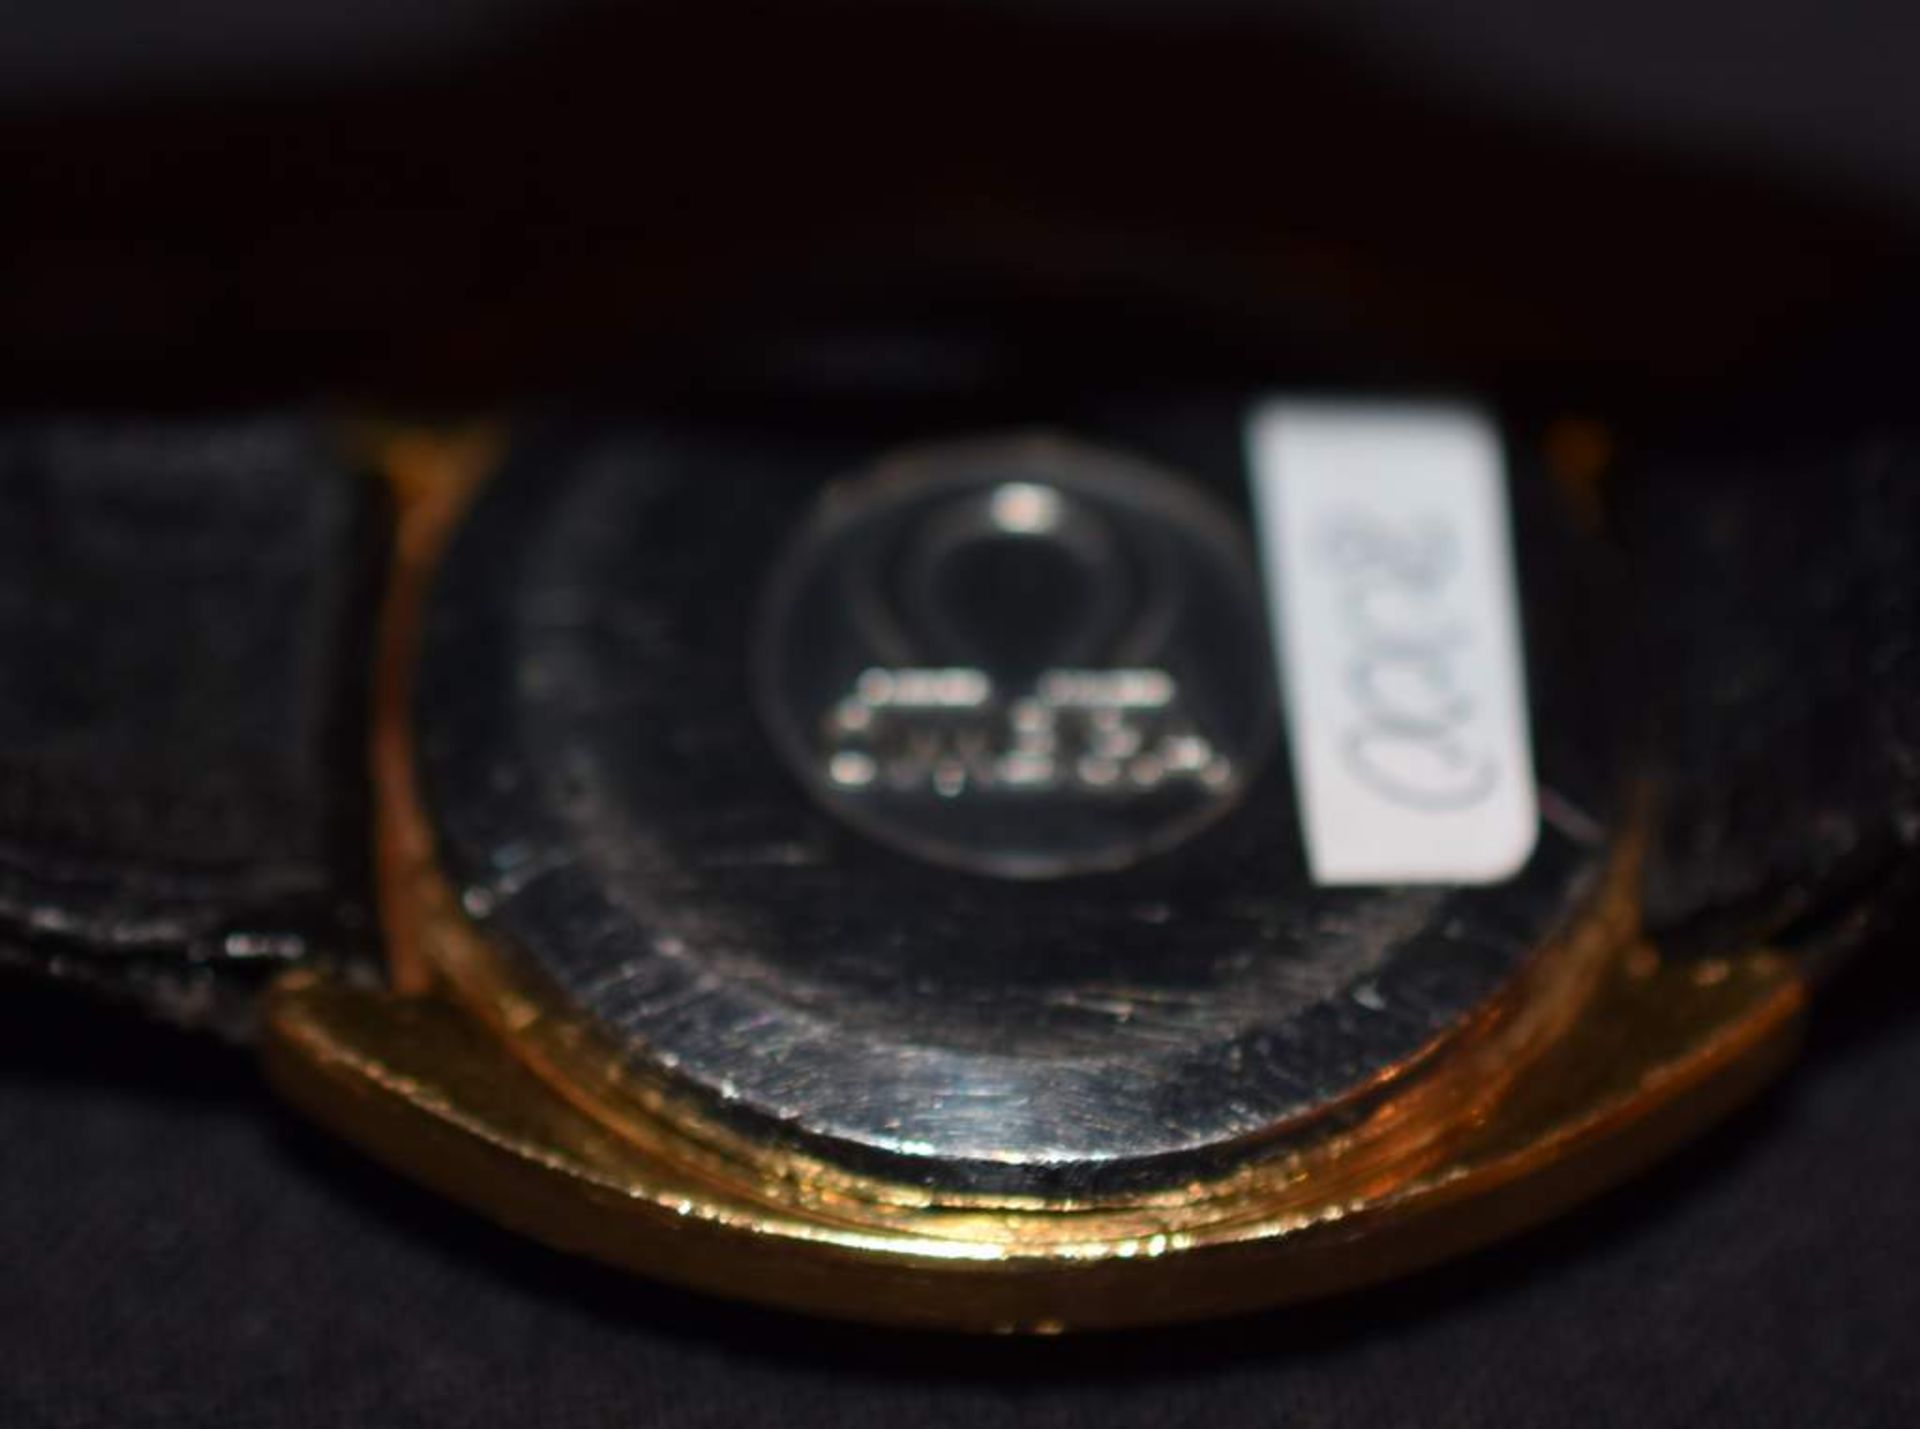 Gentleman's Omega Quartz Wristwatch Gold-Plated - Image 3 of 4